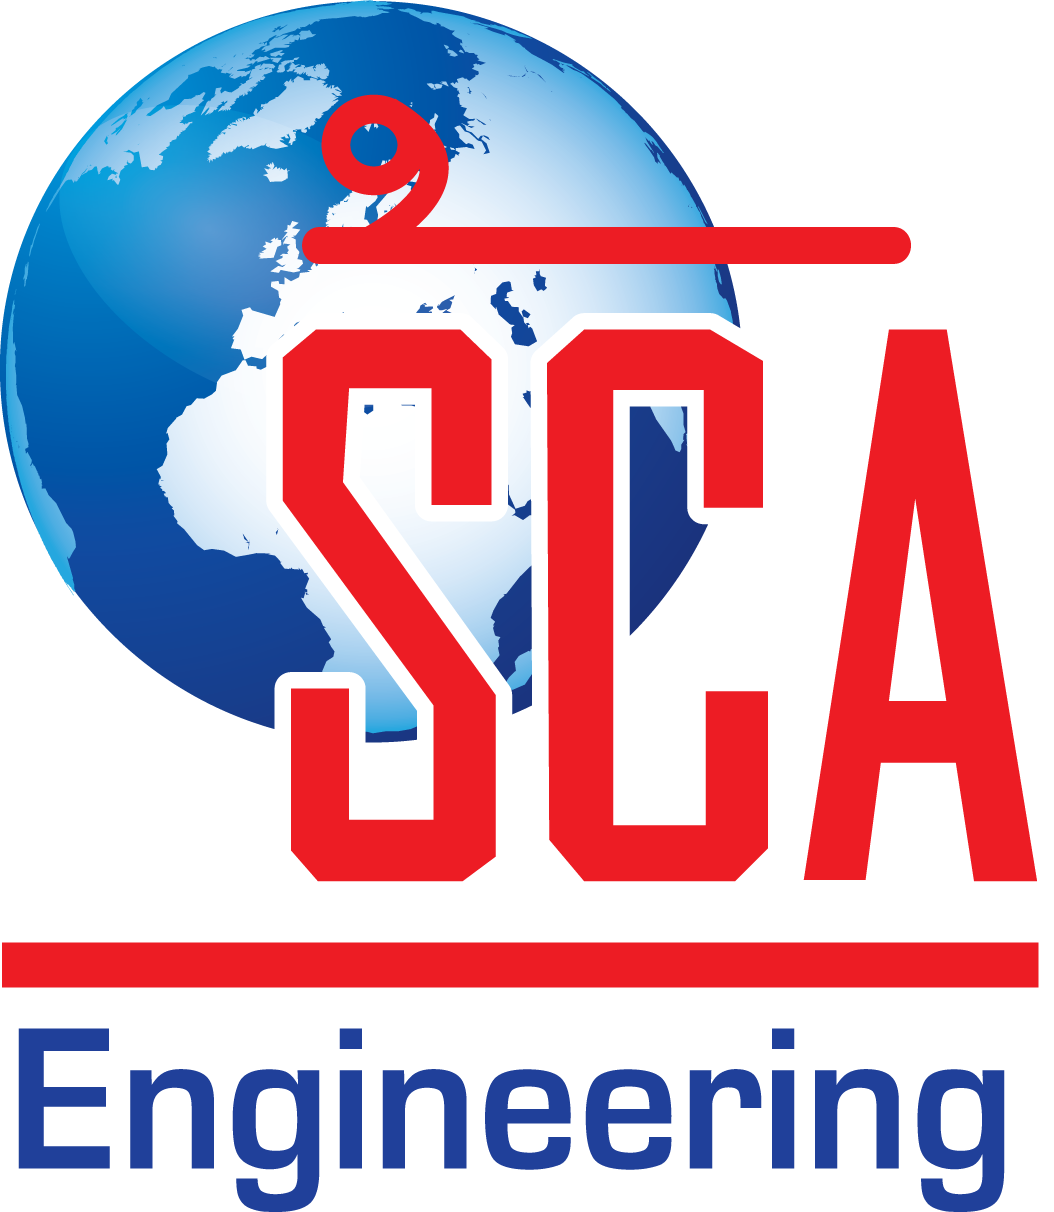 SCA Engineering Malaysia